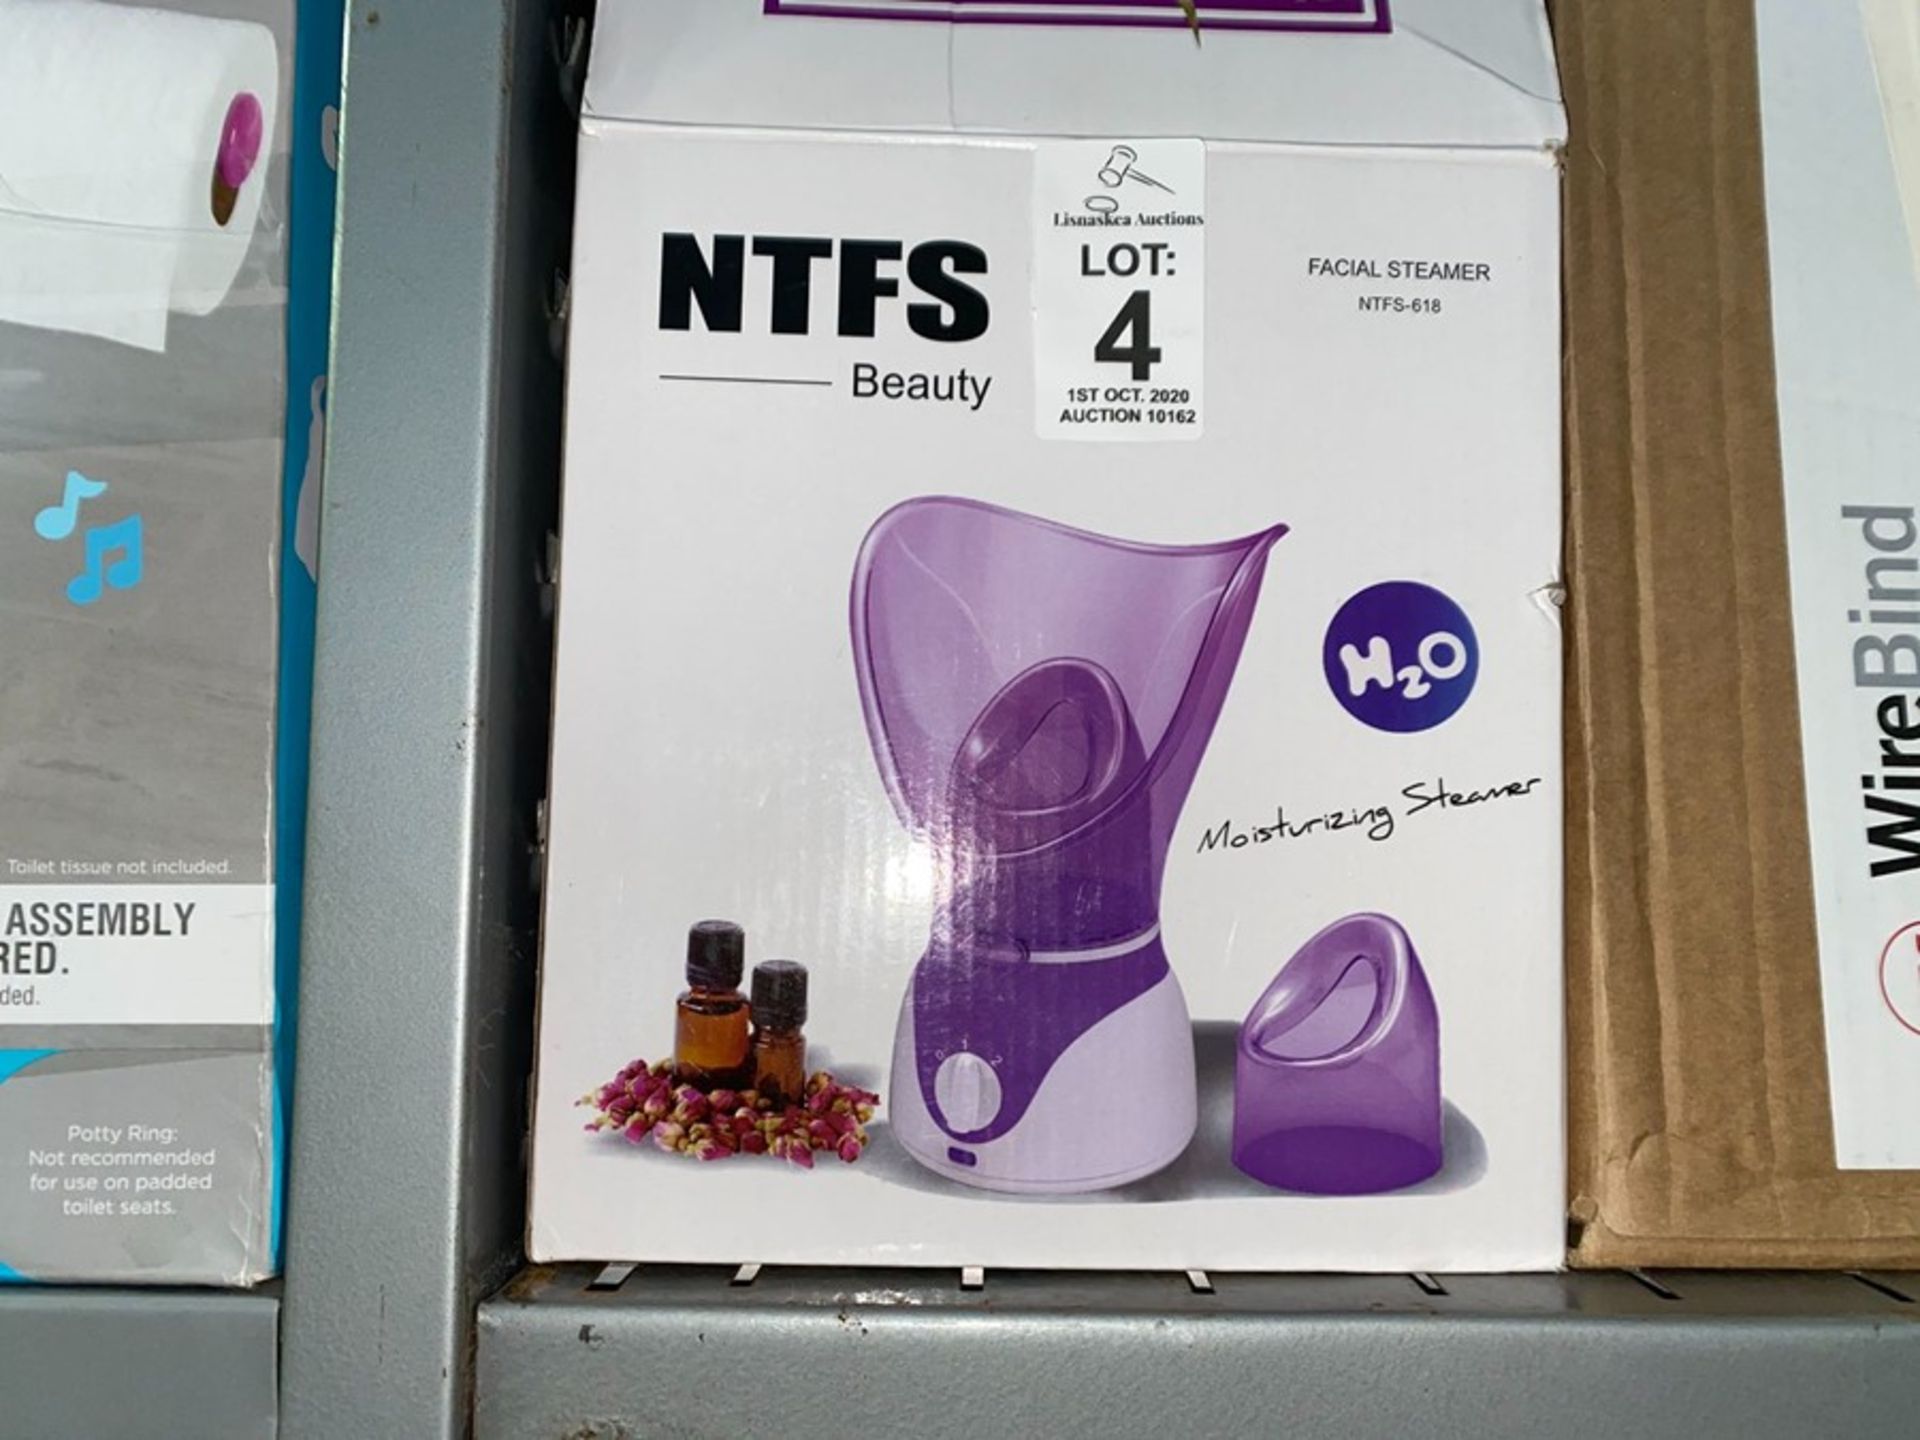 NTFS BEAUTY FACIAL STEAMER